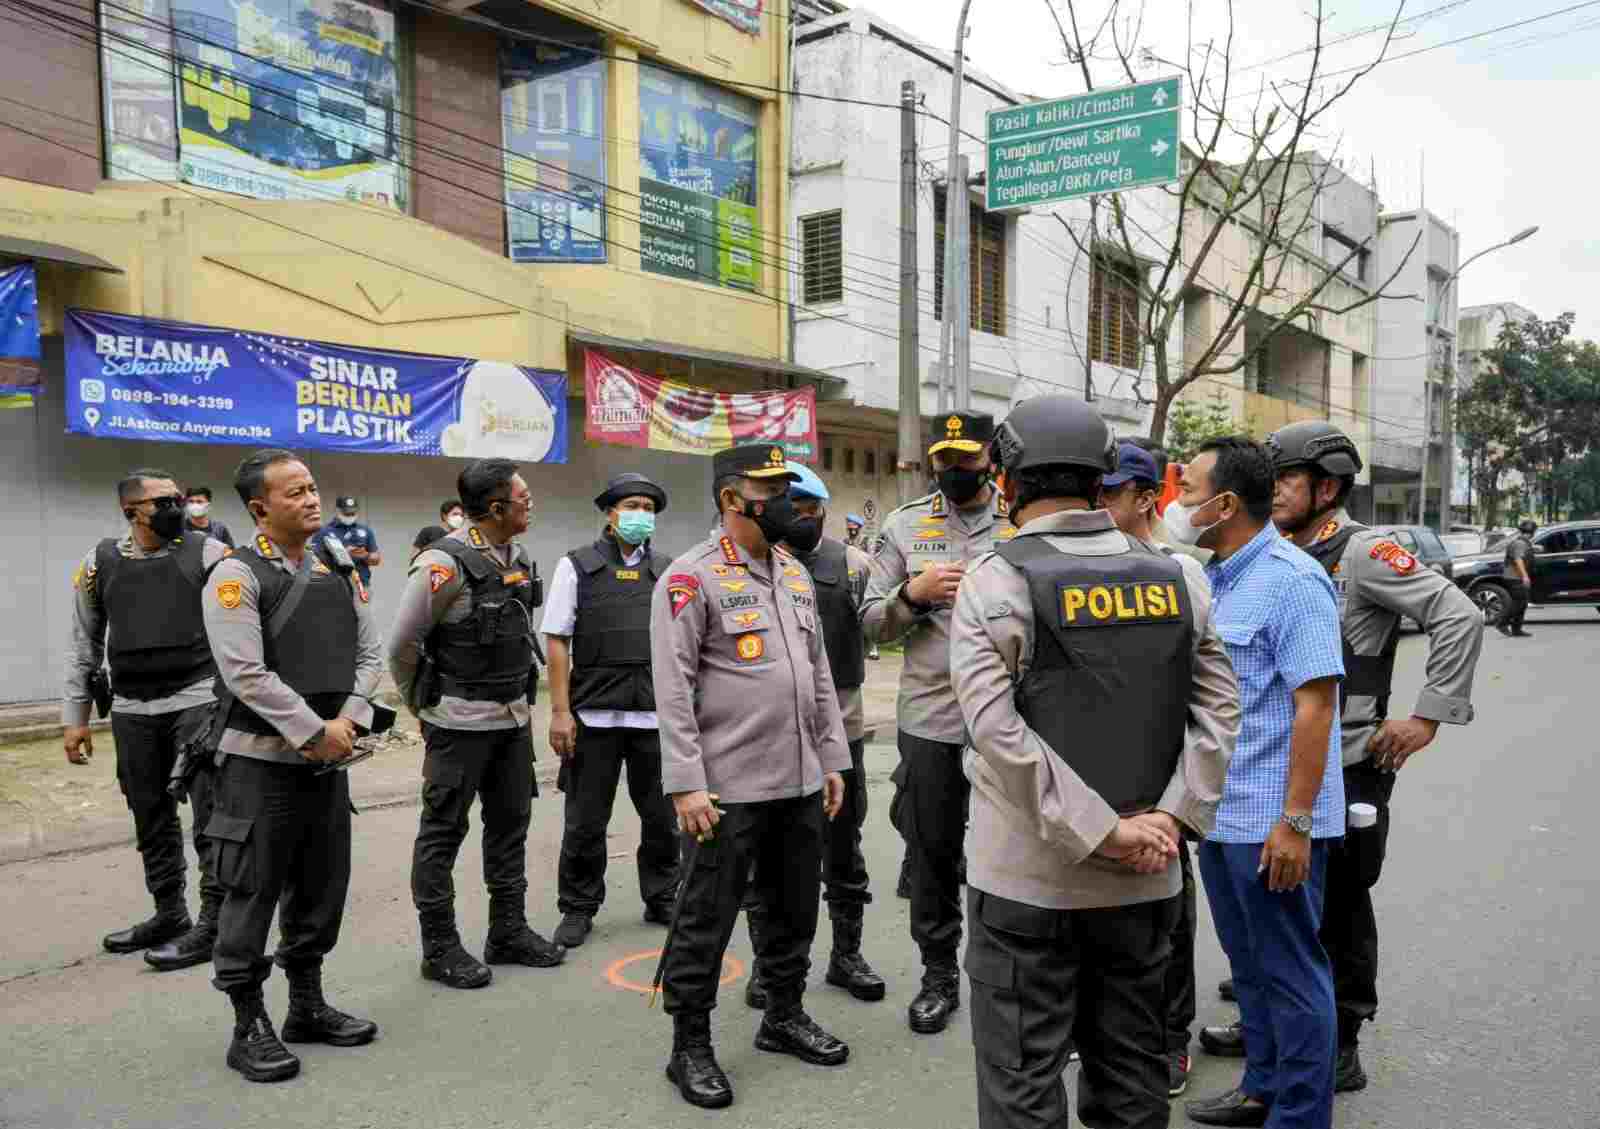 Kapolri Jenderal Polisi Listyo Sigit Prabowo sedang melihat kondisi Polsek Astana Anyar Bandung